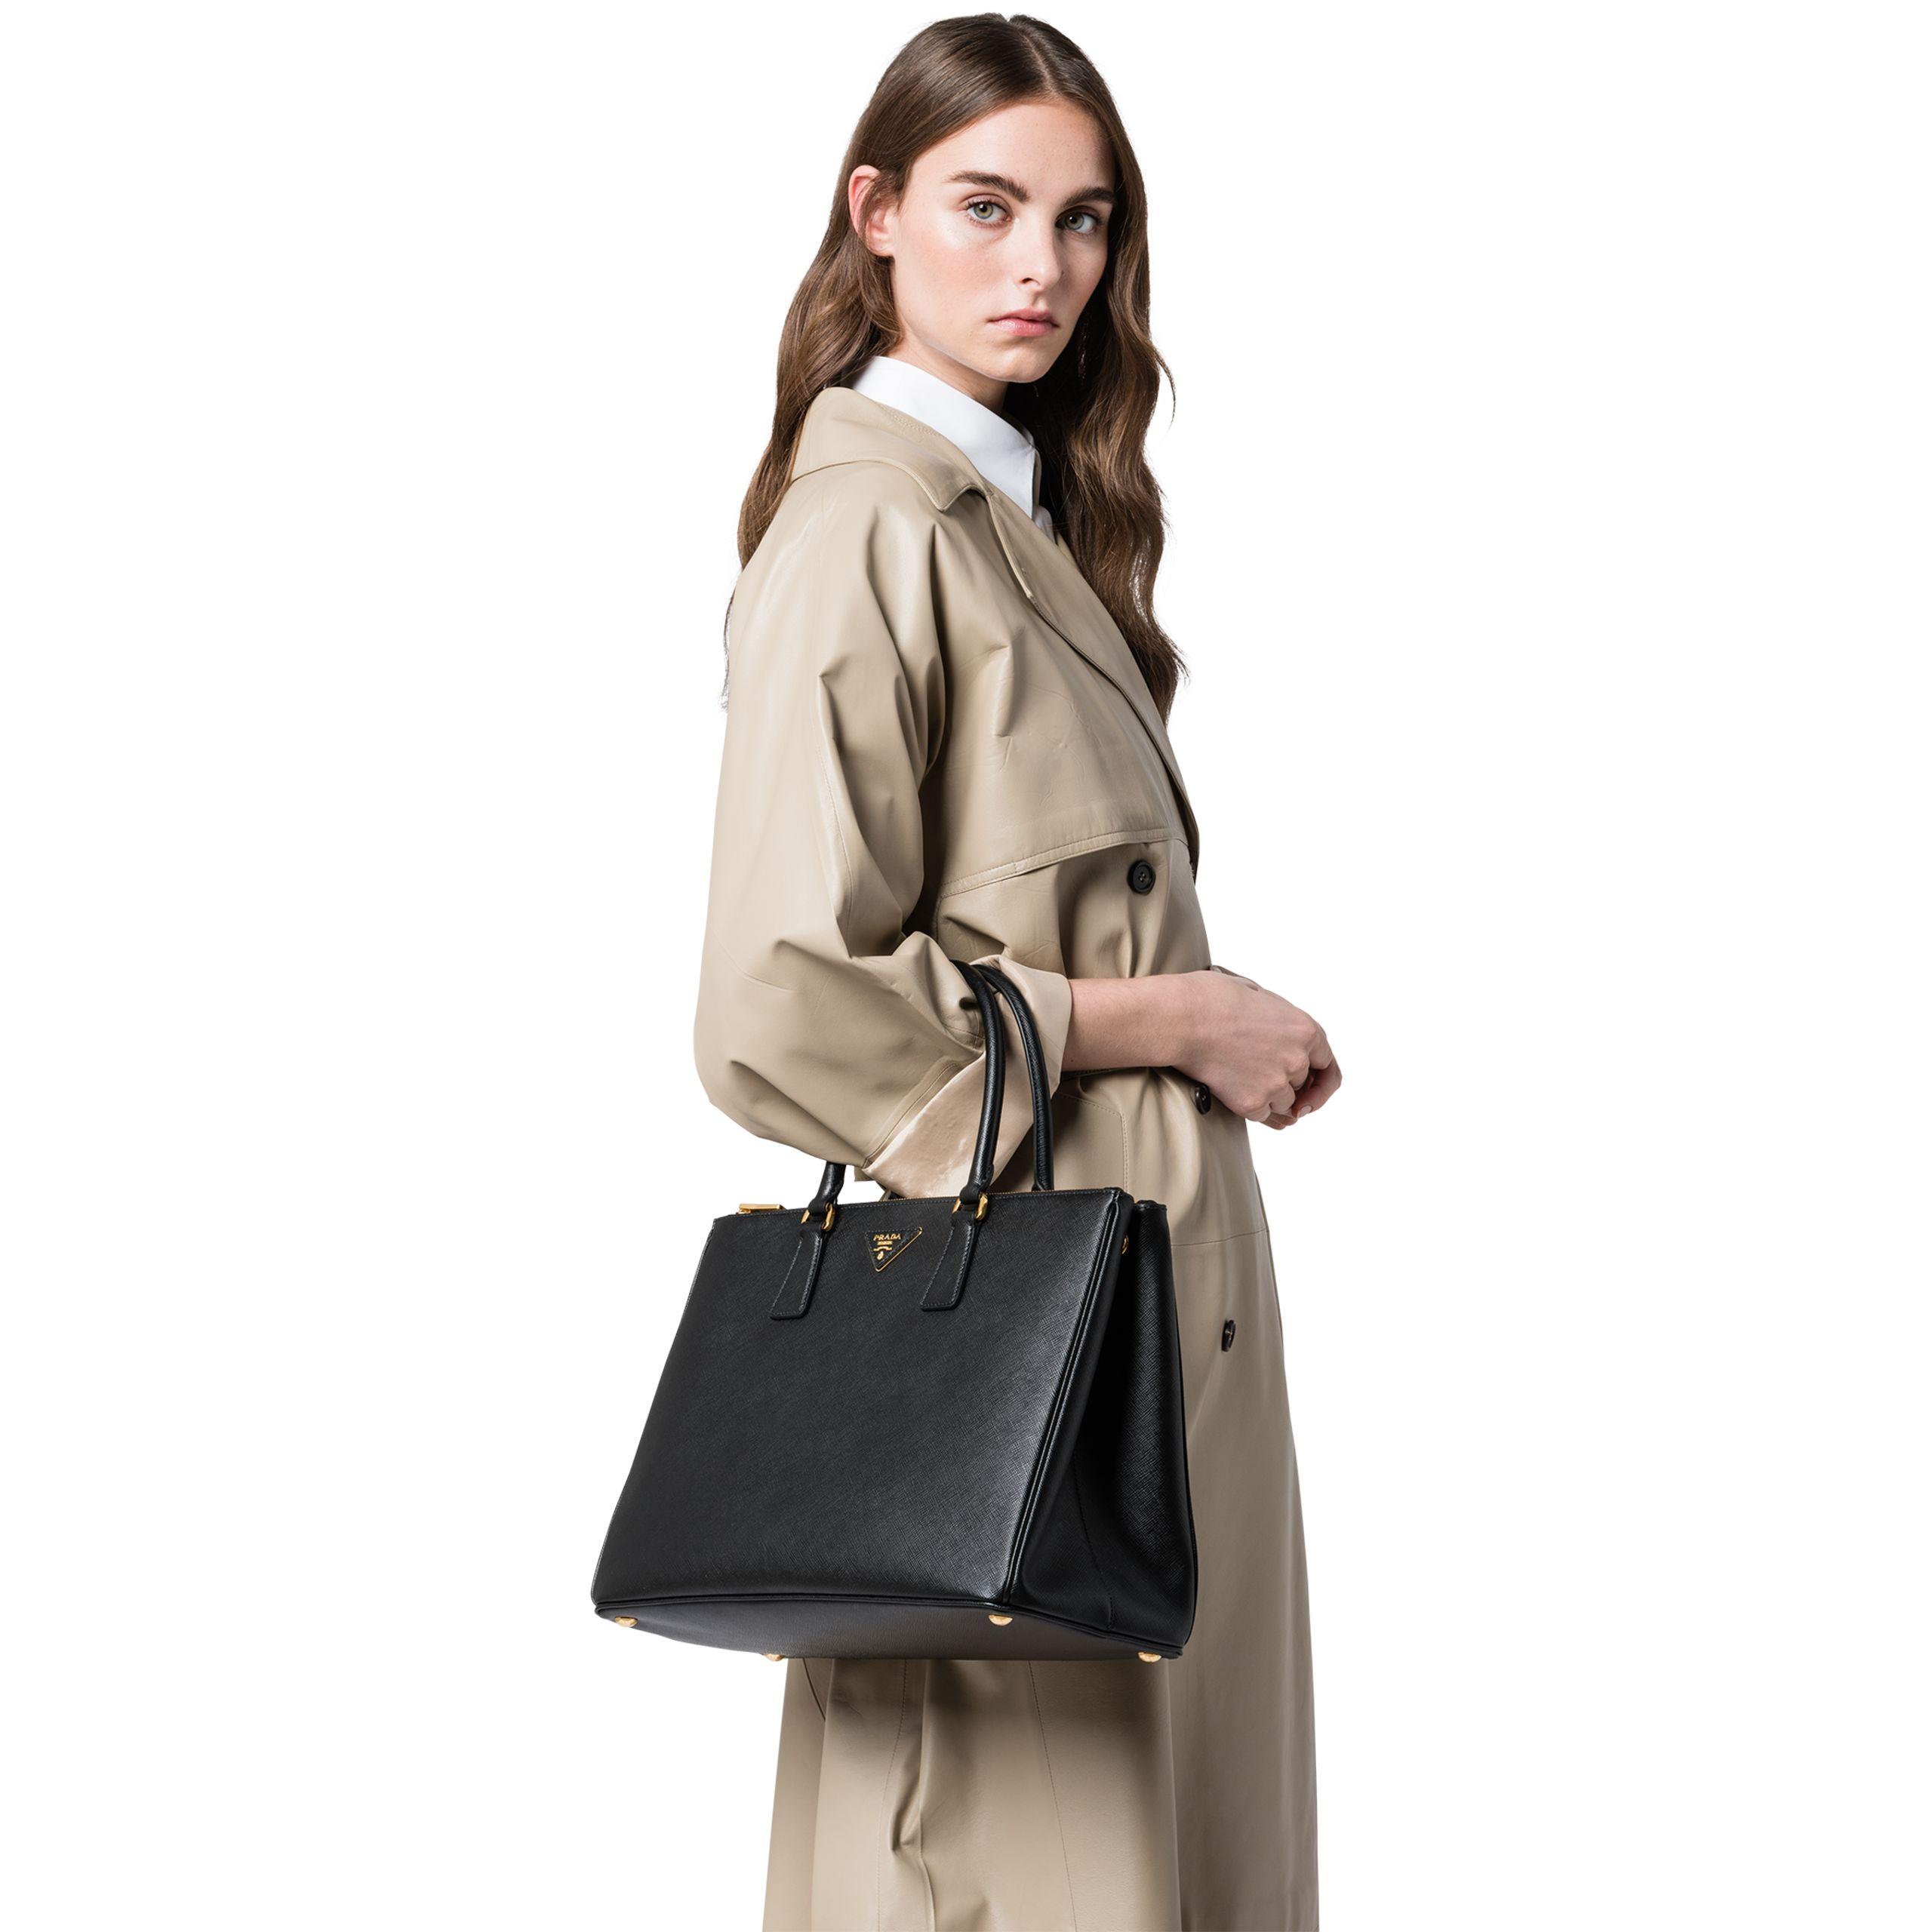 Prada Galleria Large Saffiano Leather Bag in Black - Lyst